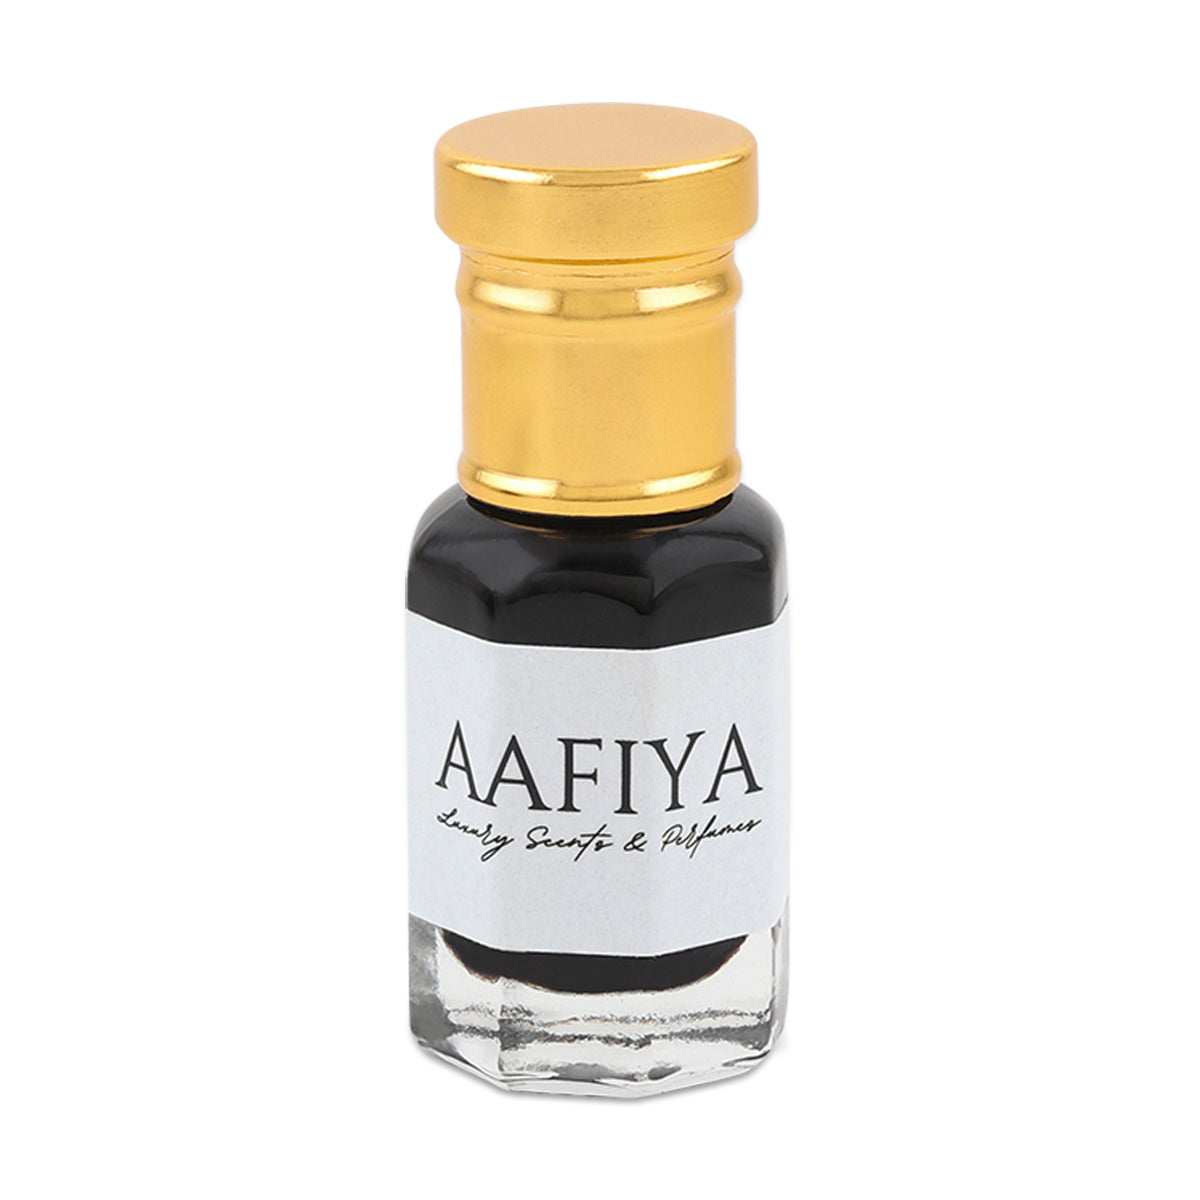 Ruh khus Aafiya Luxury Scents & Perfumes